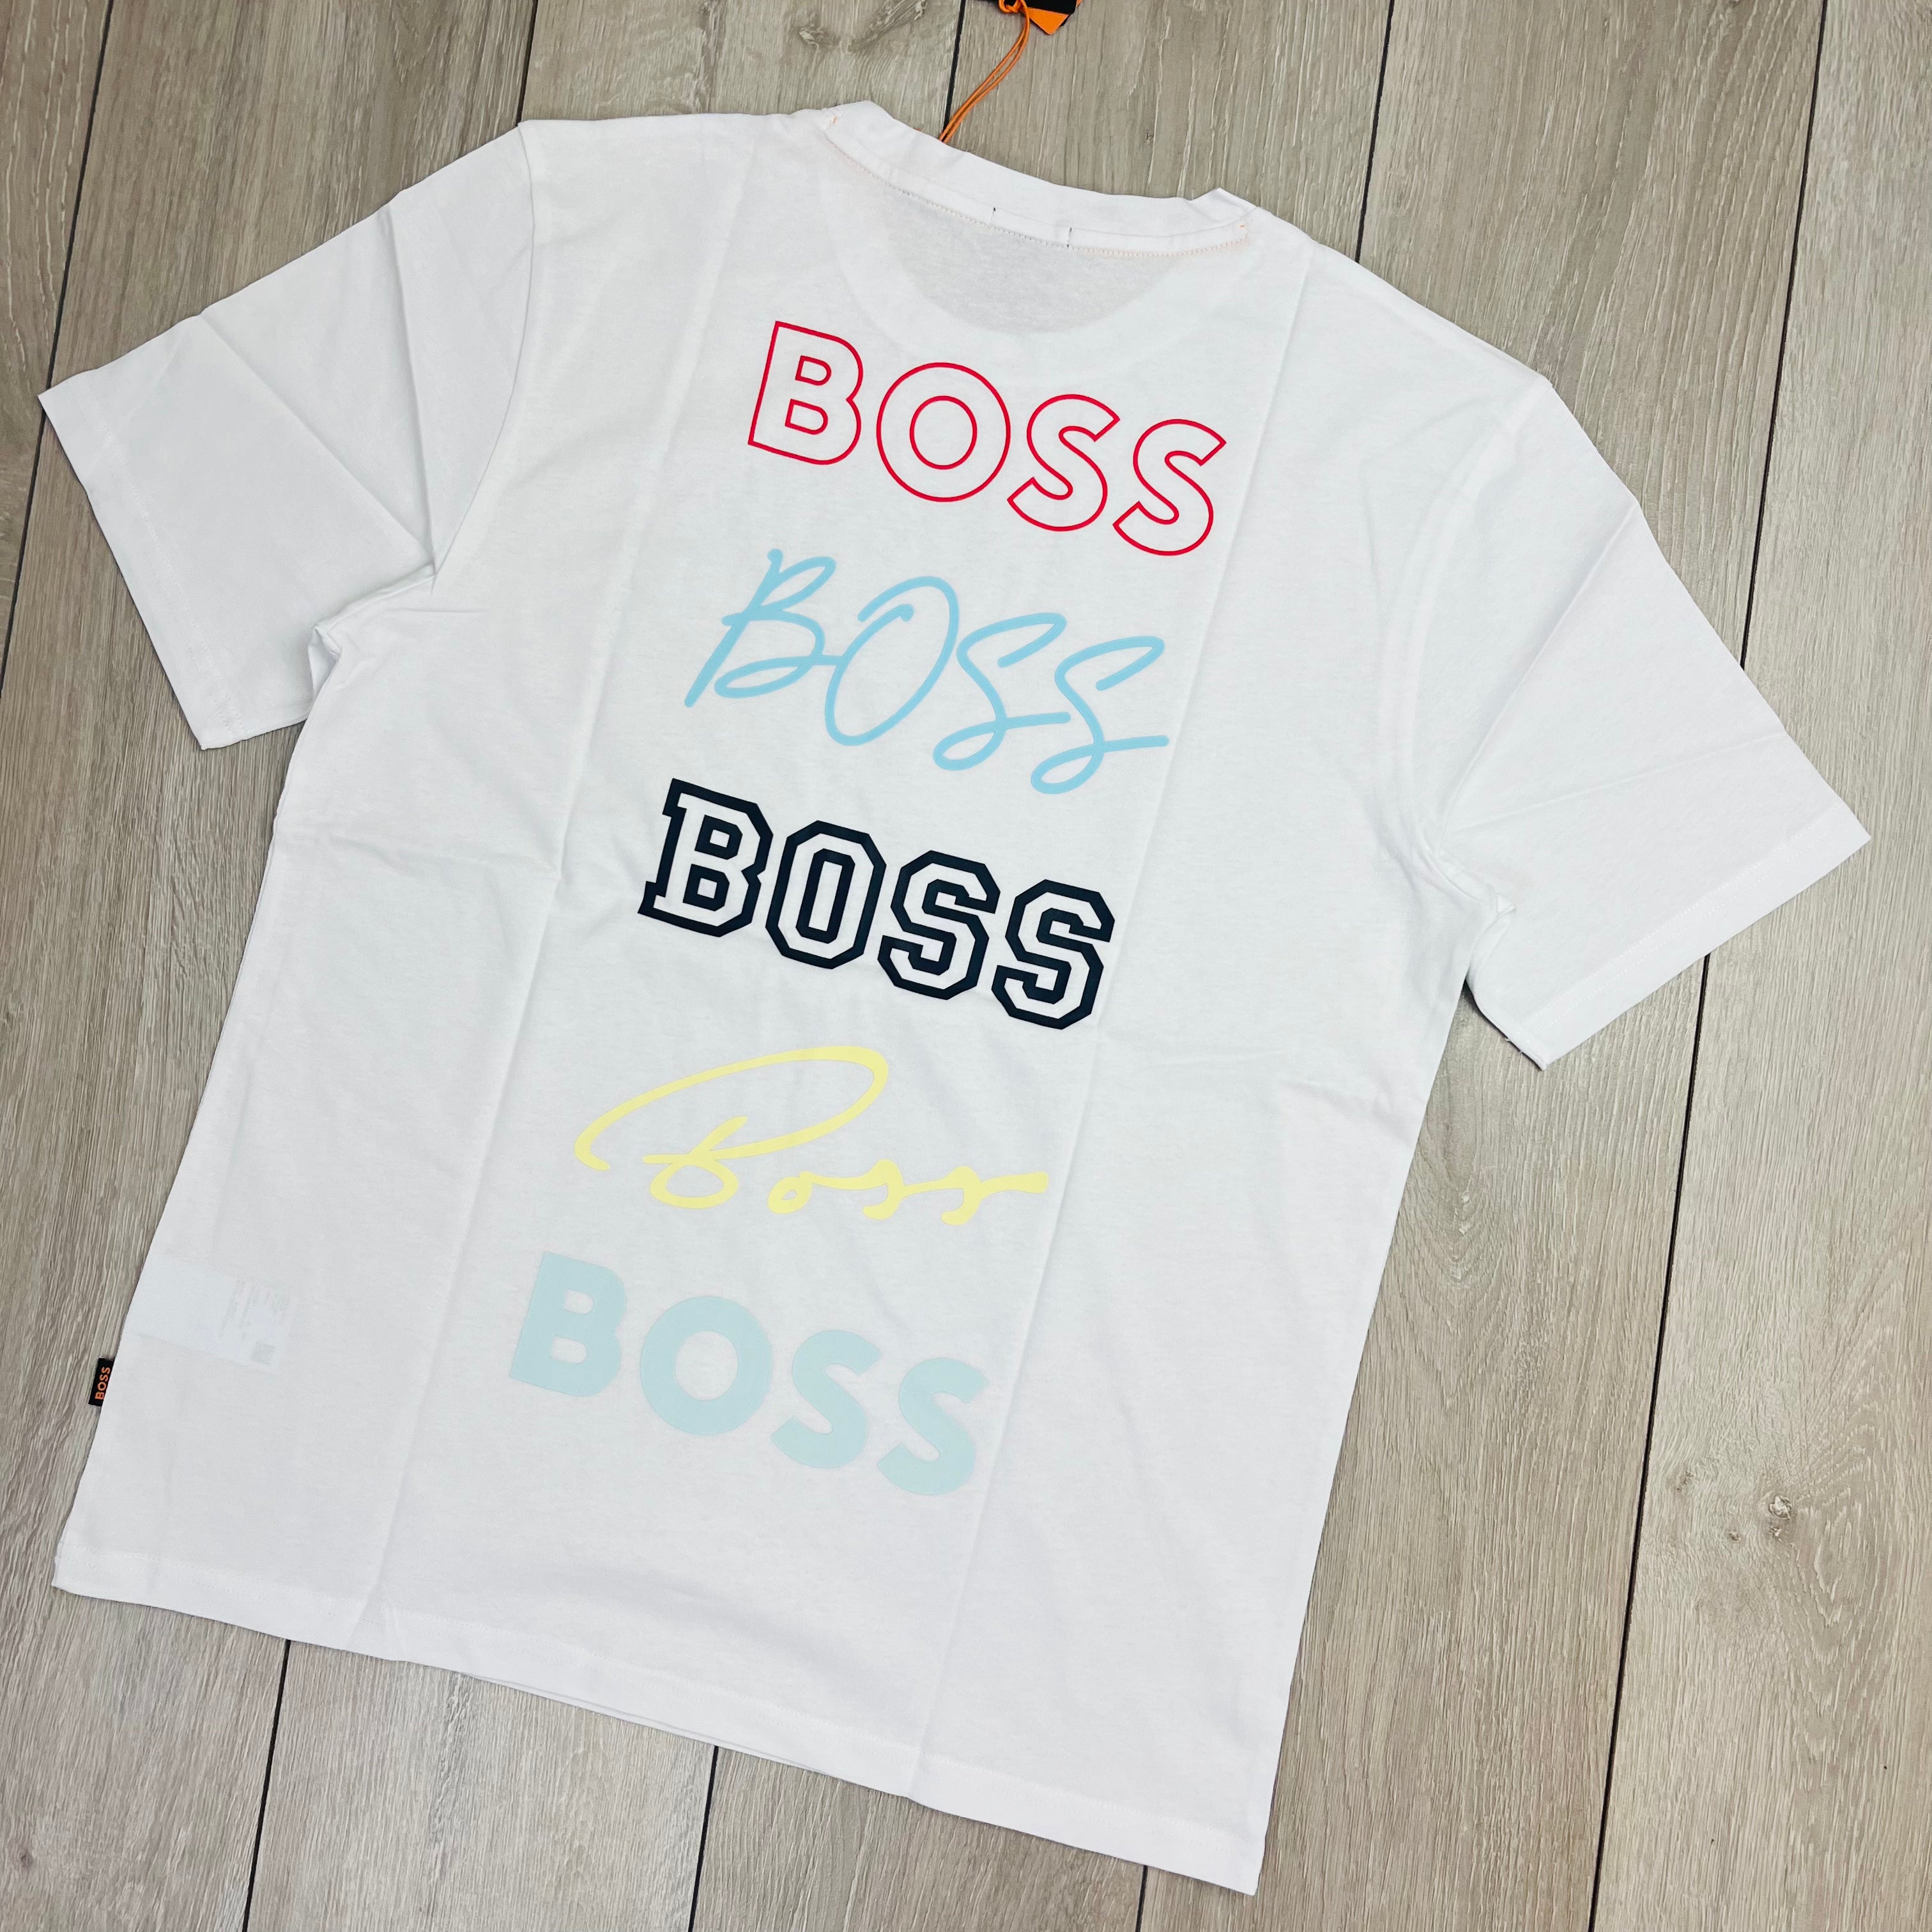 Hugo Boss Printed T-Shirt